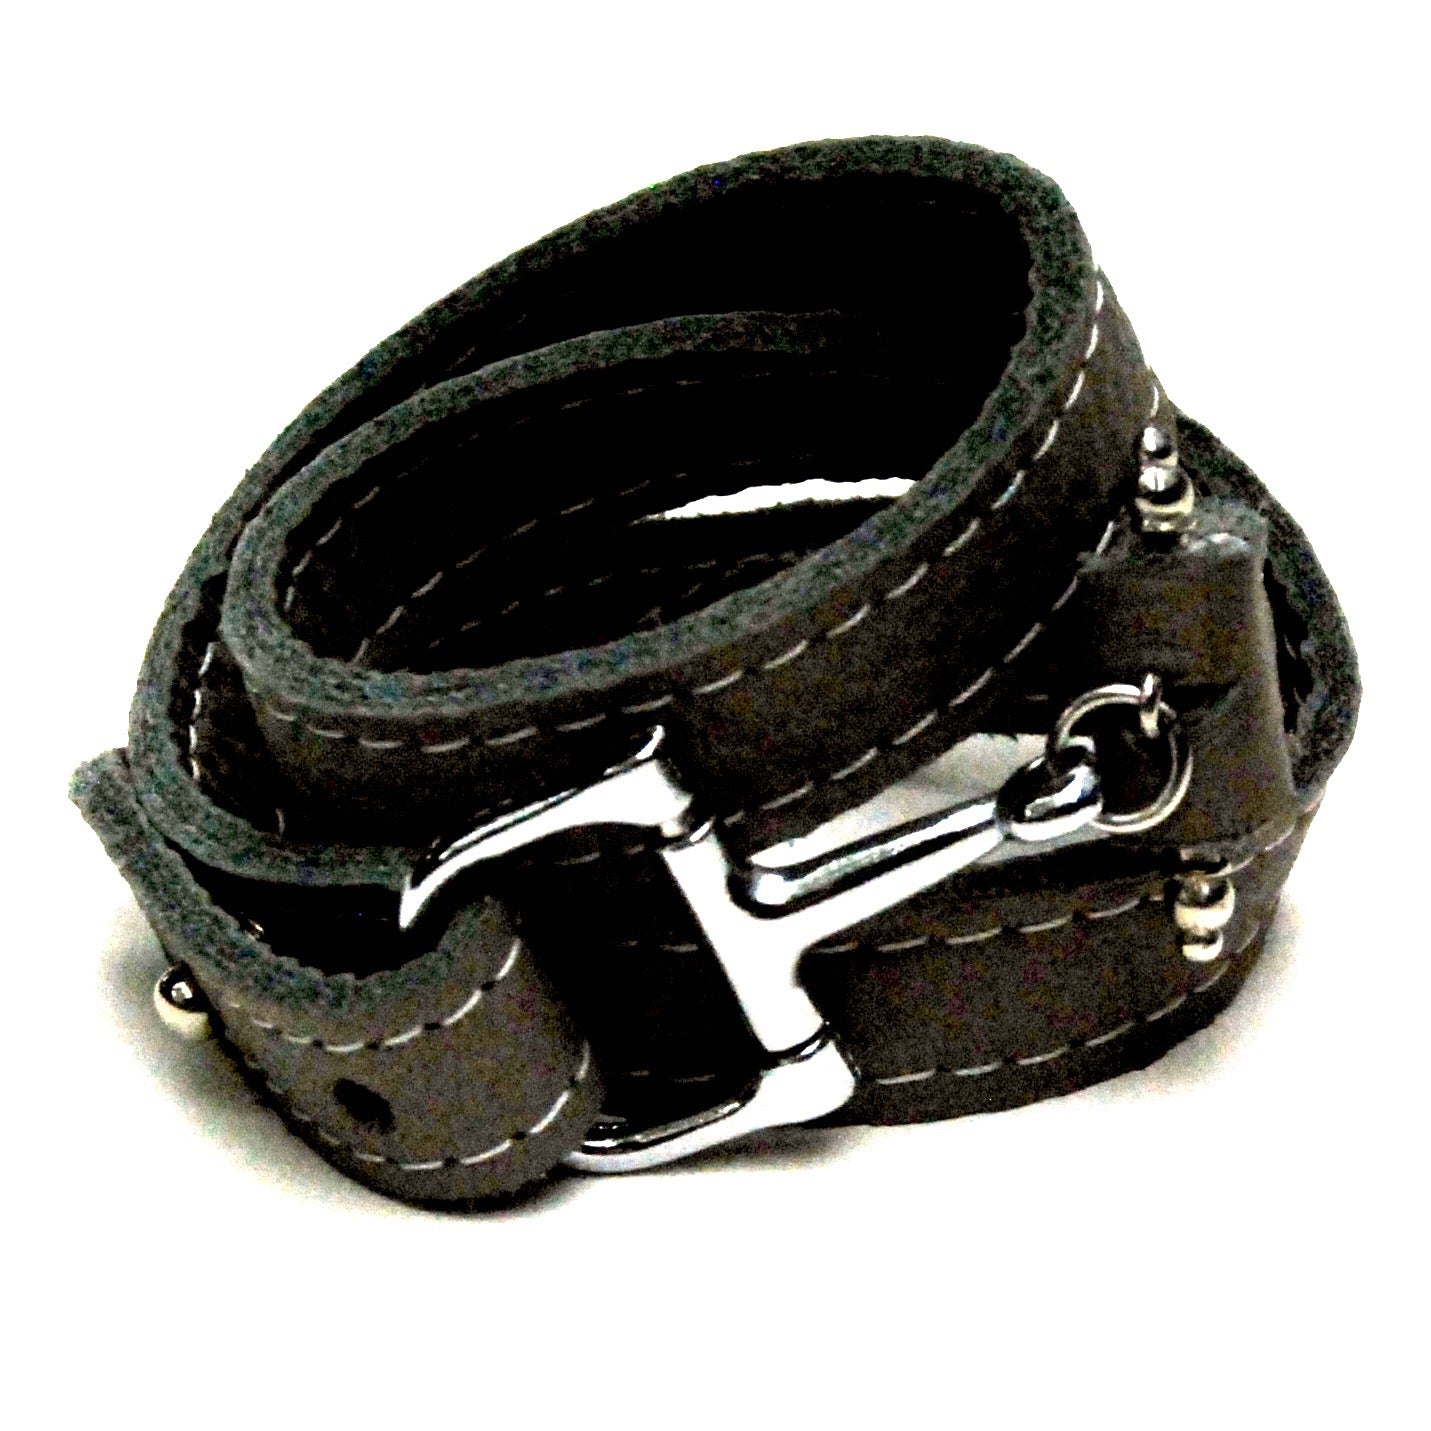 PERCHERON LEATHER WRAP in back | Equestrian leather bracelet | Leather wrap | Horse Bit Leather Cuff - AtelierCG™